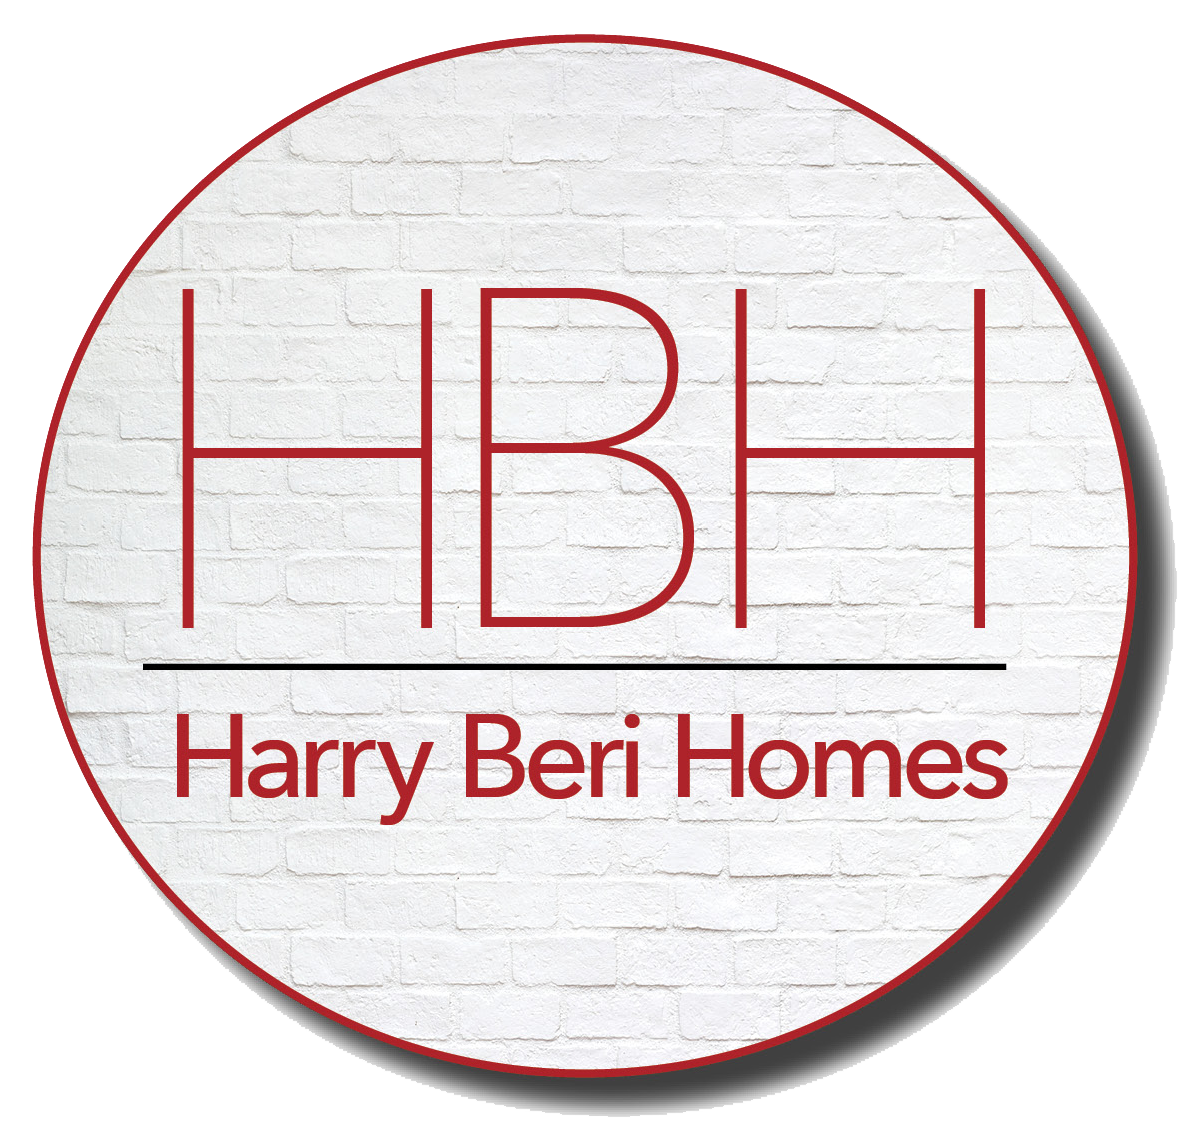 Harry Beri Homes - Keller Williams Realty